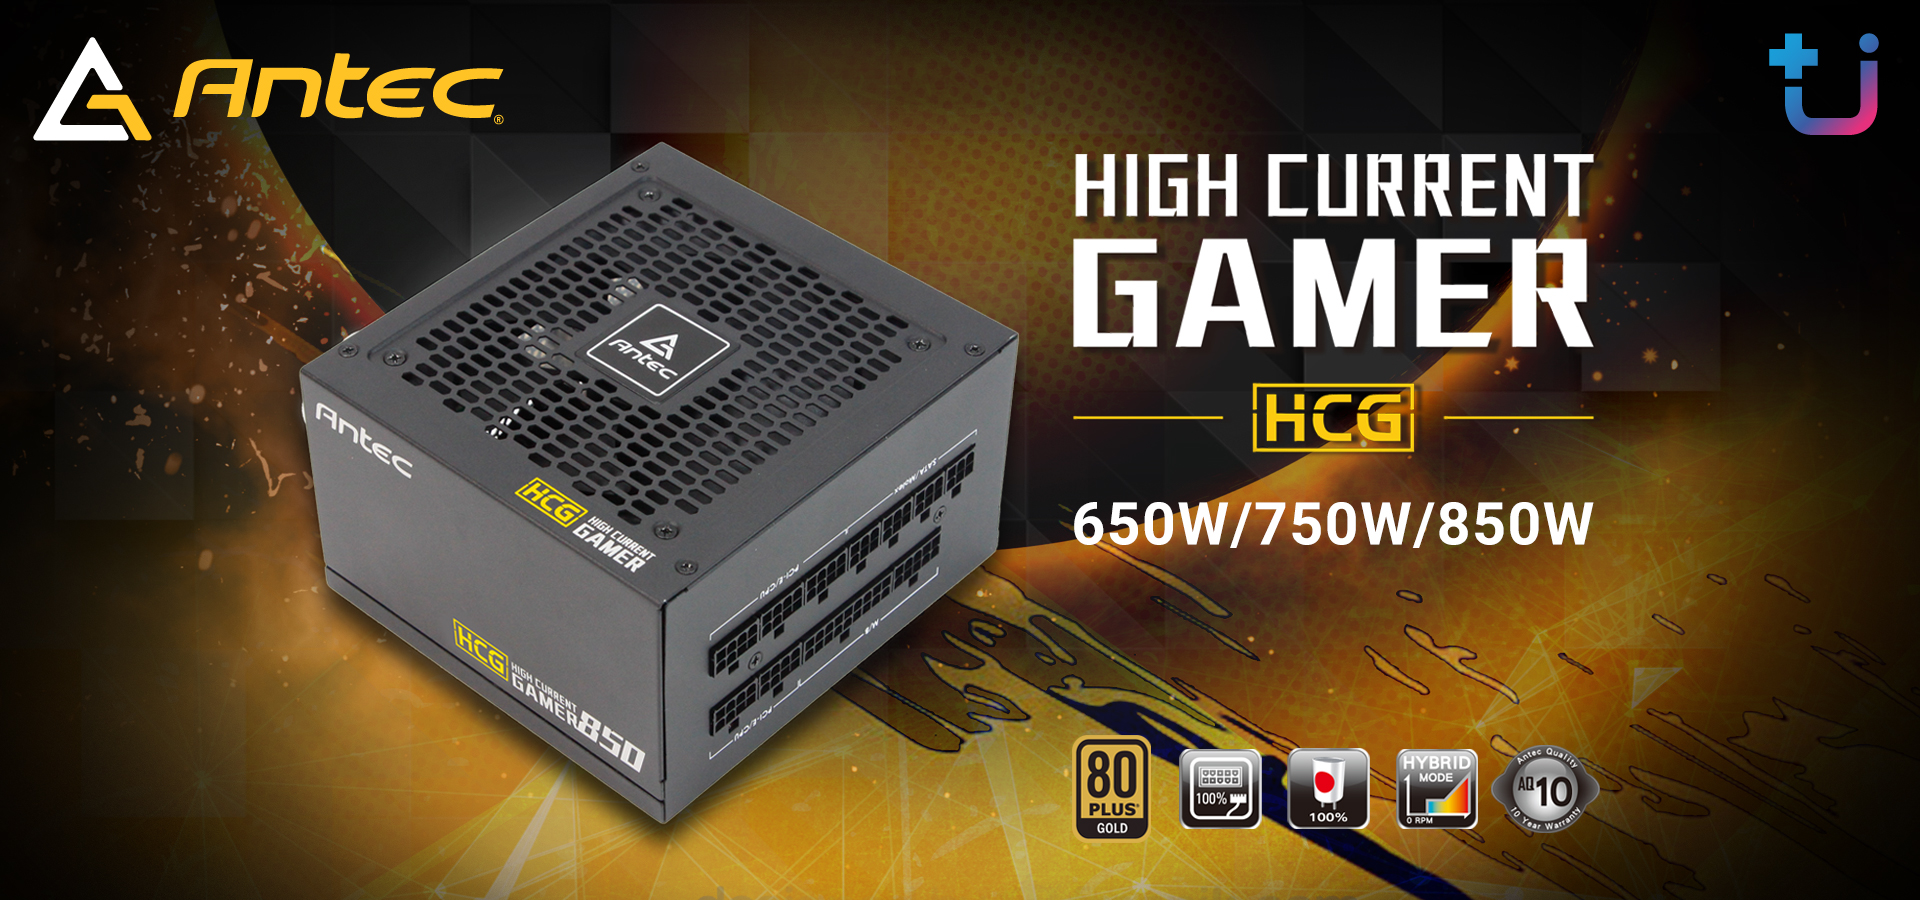 pr antec hcg gold กลับมาทวงบัลลังก์ PSU !! Antec High Current Gamer 80 Plus Gold เหนือชั้นด้วยประสิทธิภาพ และ ราคาสุดคุ้ม